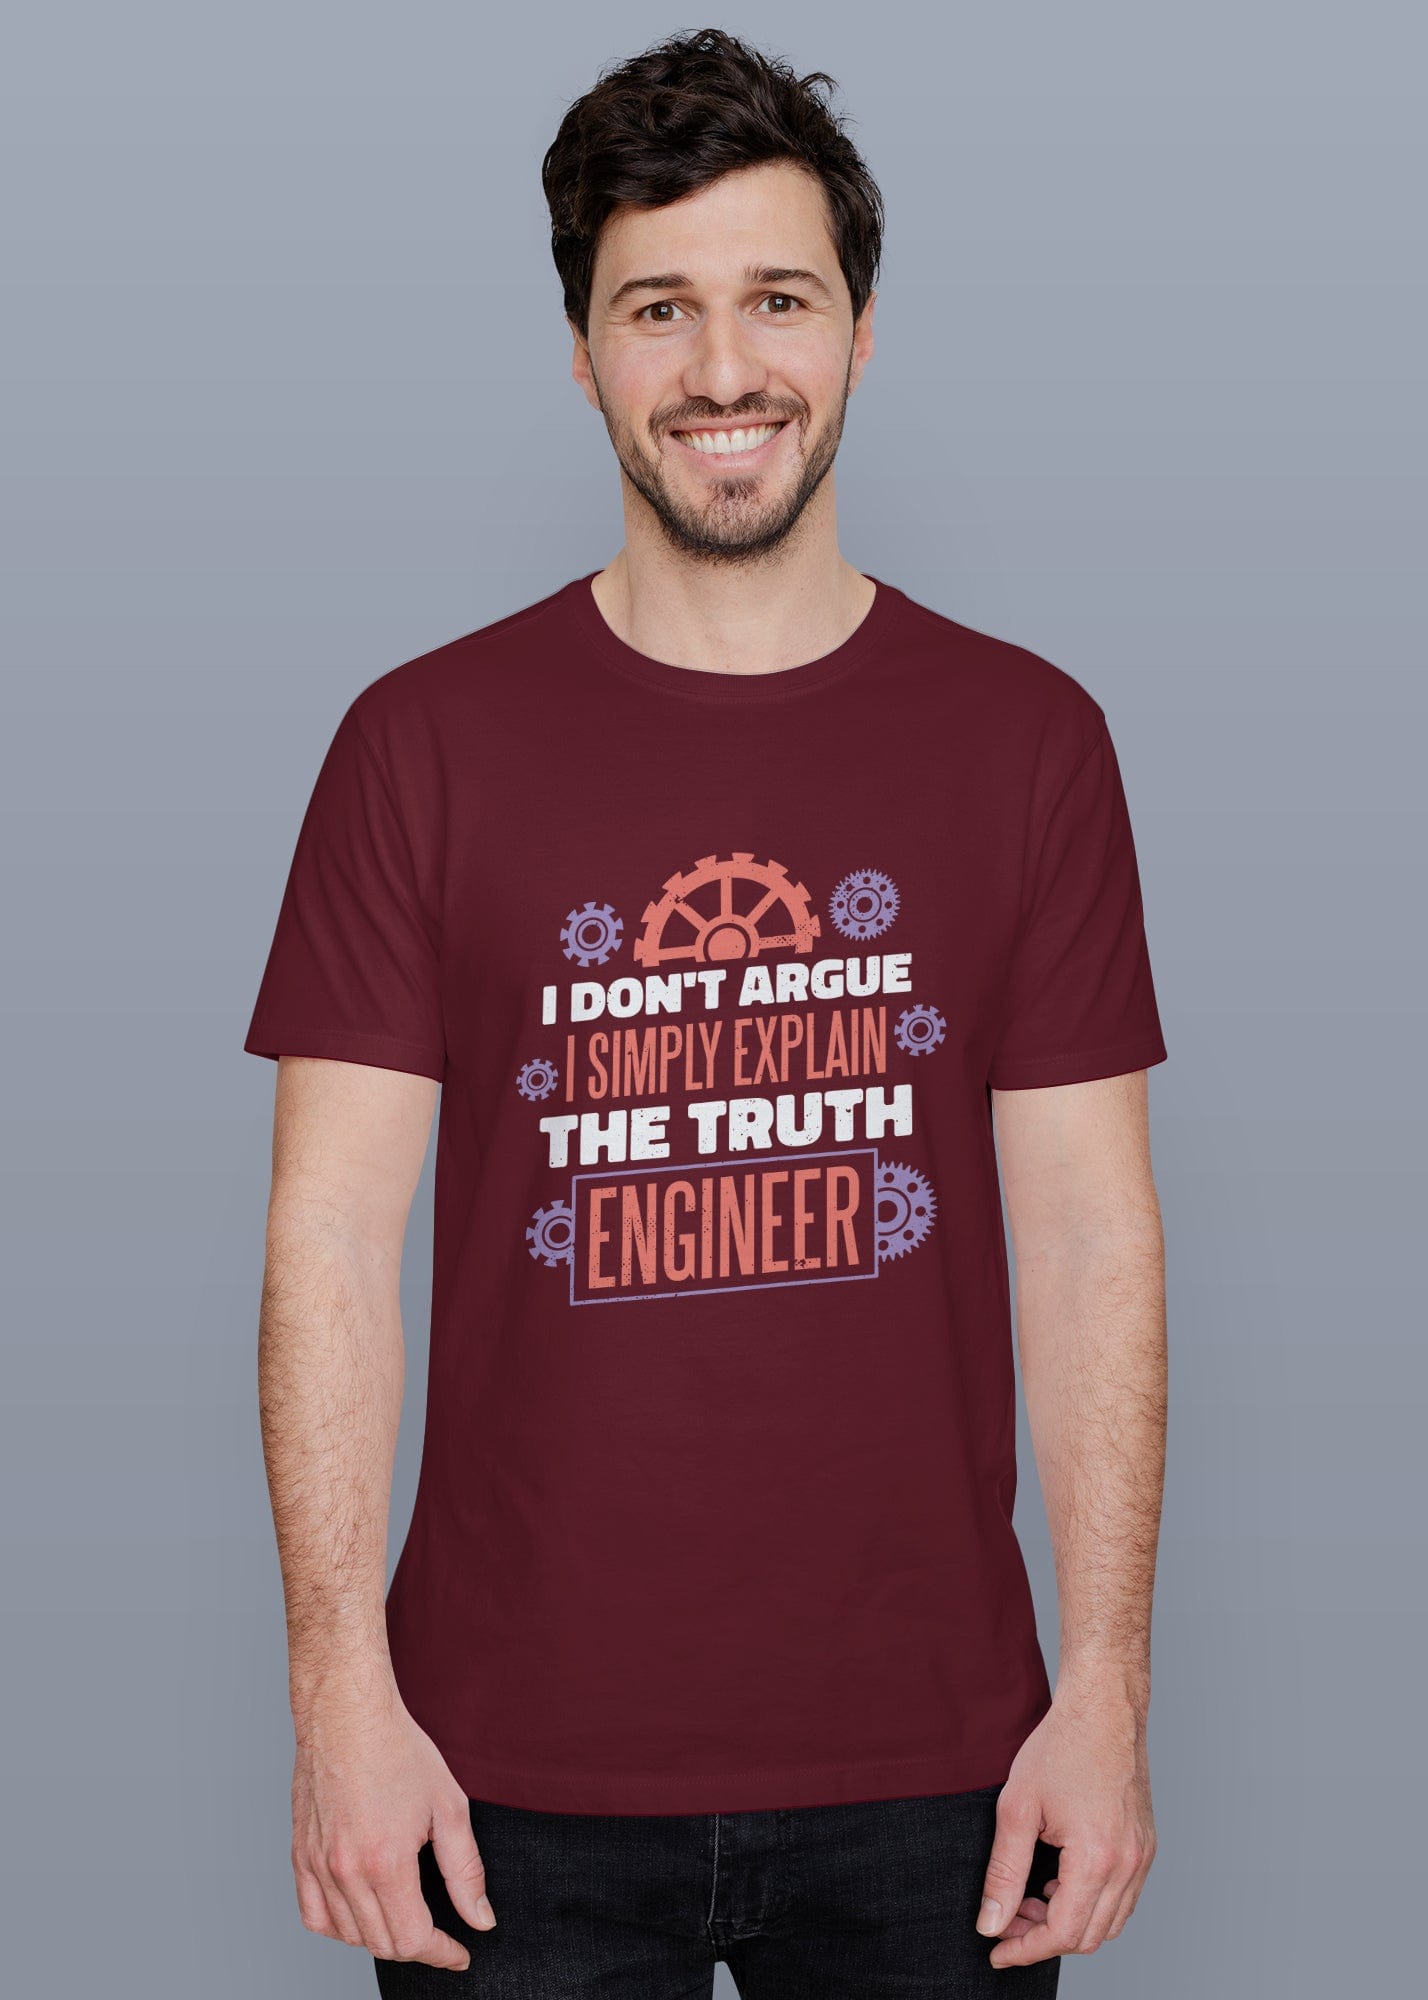 Engineer Quote Printed Half Sleeve Premium Cotton T-shirt For Men